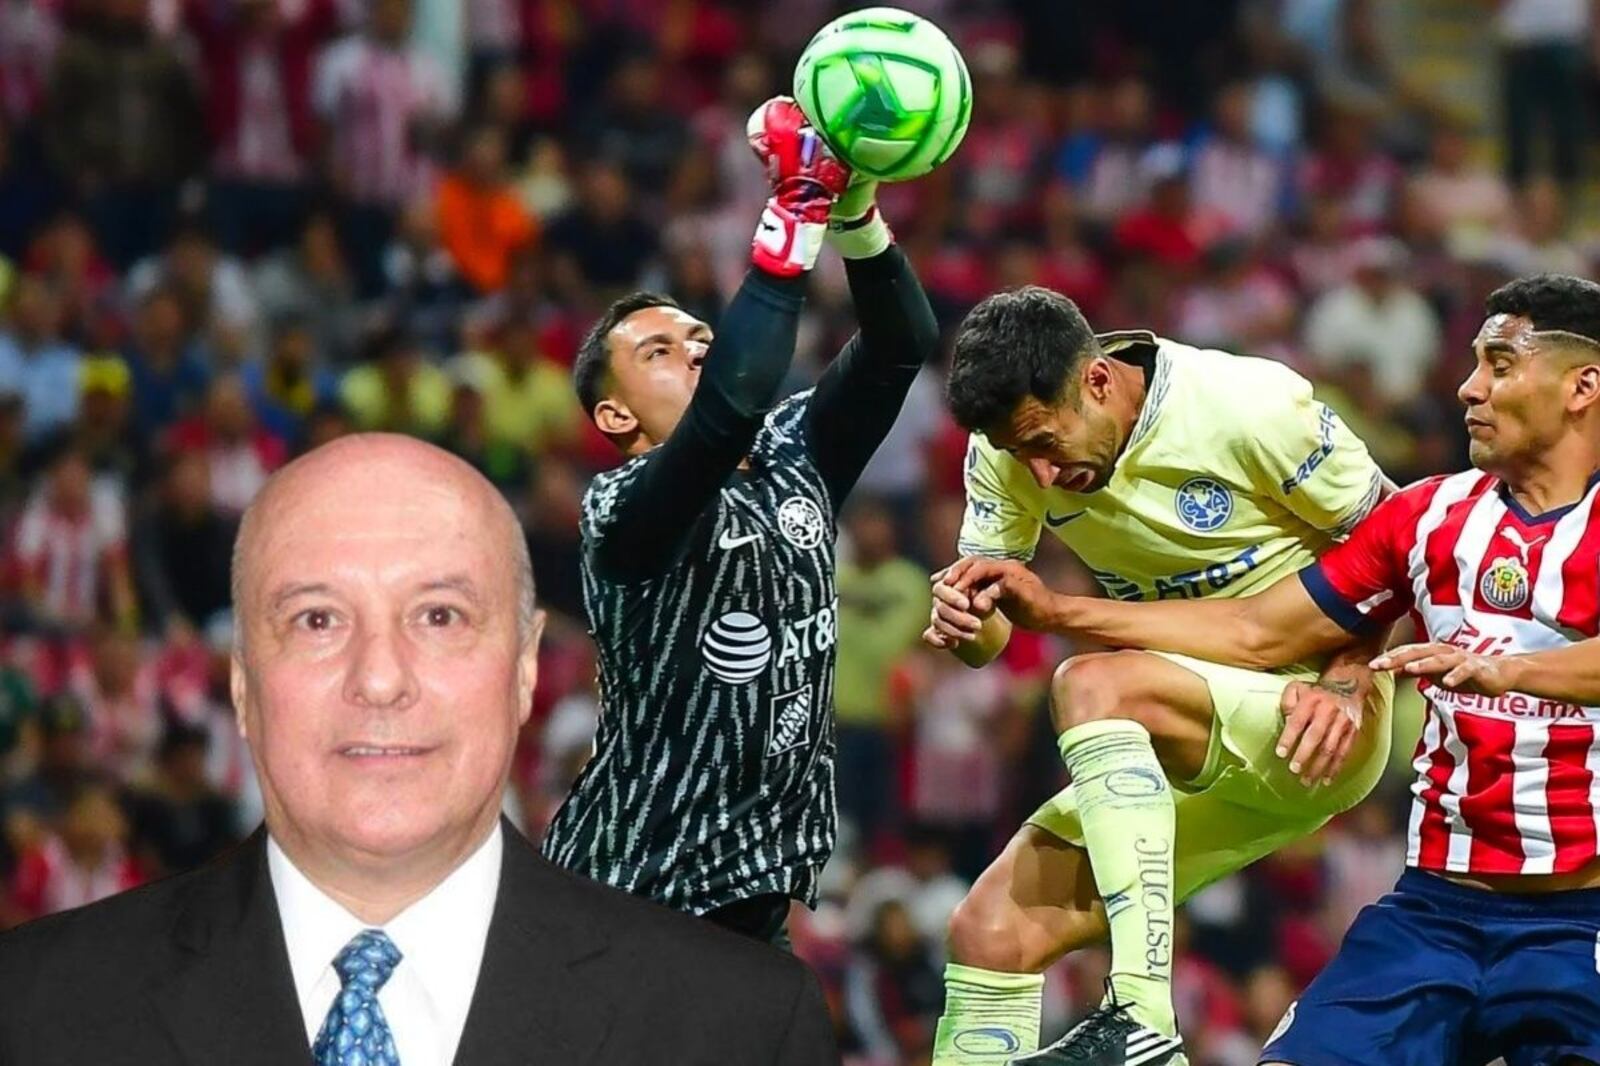 (FOTO) Ex árbitro revela cómo se rompió el reglamento en pleno Chivas vs América